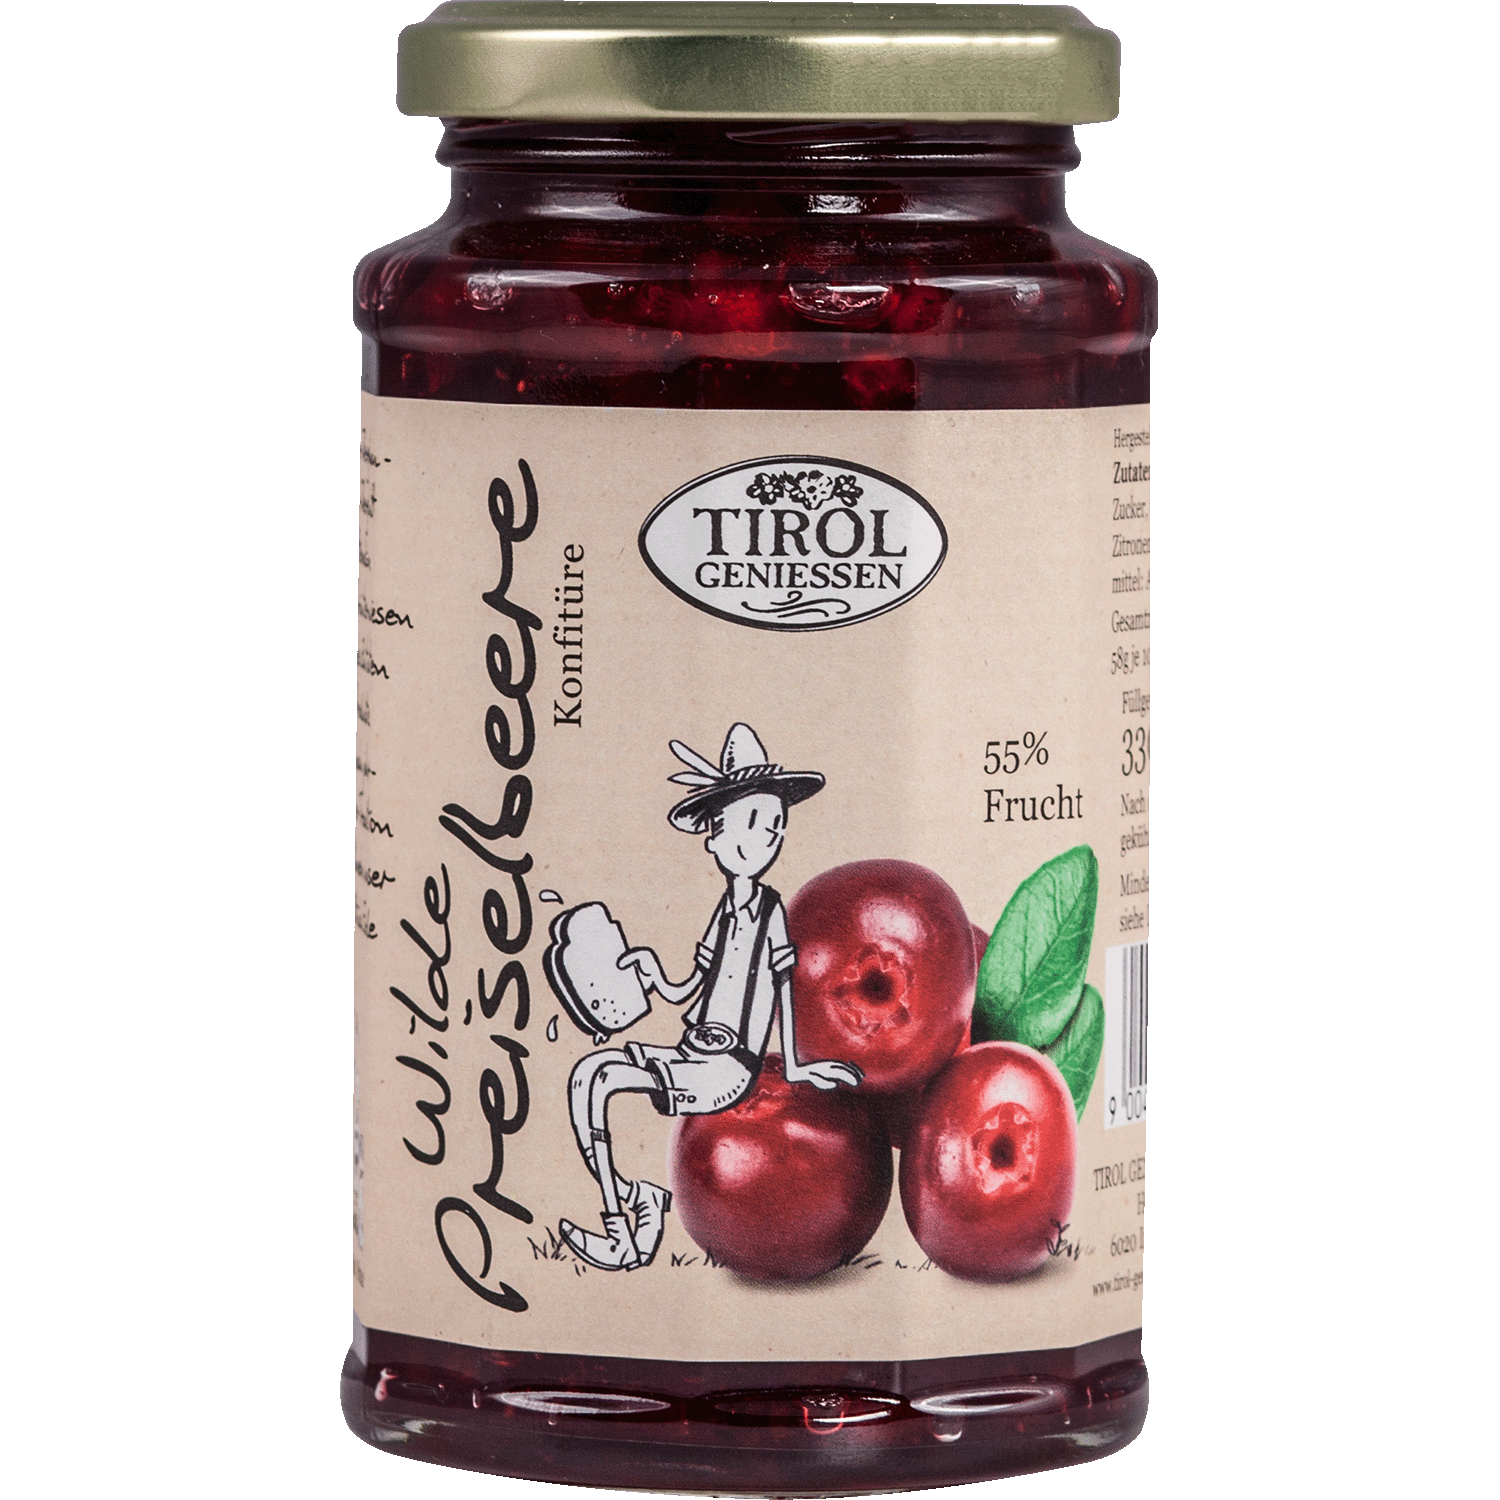 Wild Lingonberry Jam from Austria from Tirol Geniessen